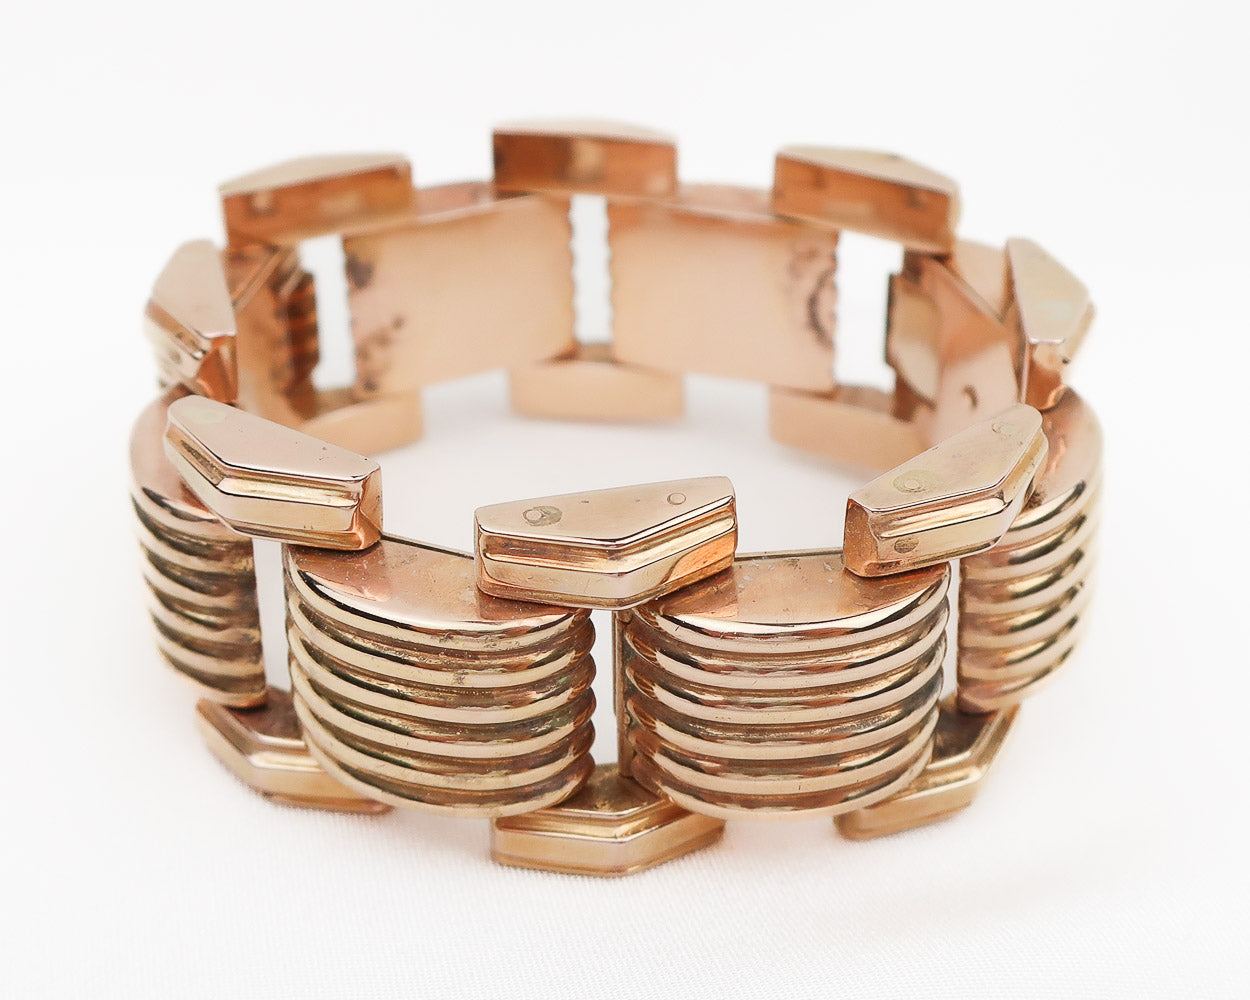 Retro Two-Tone Gold Link Bracelet